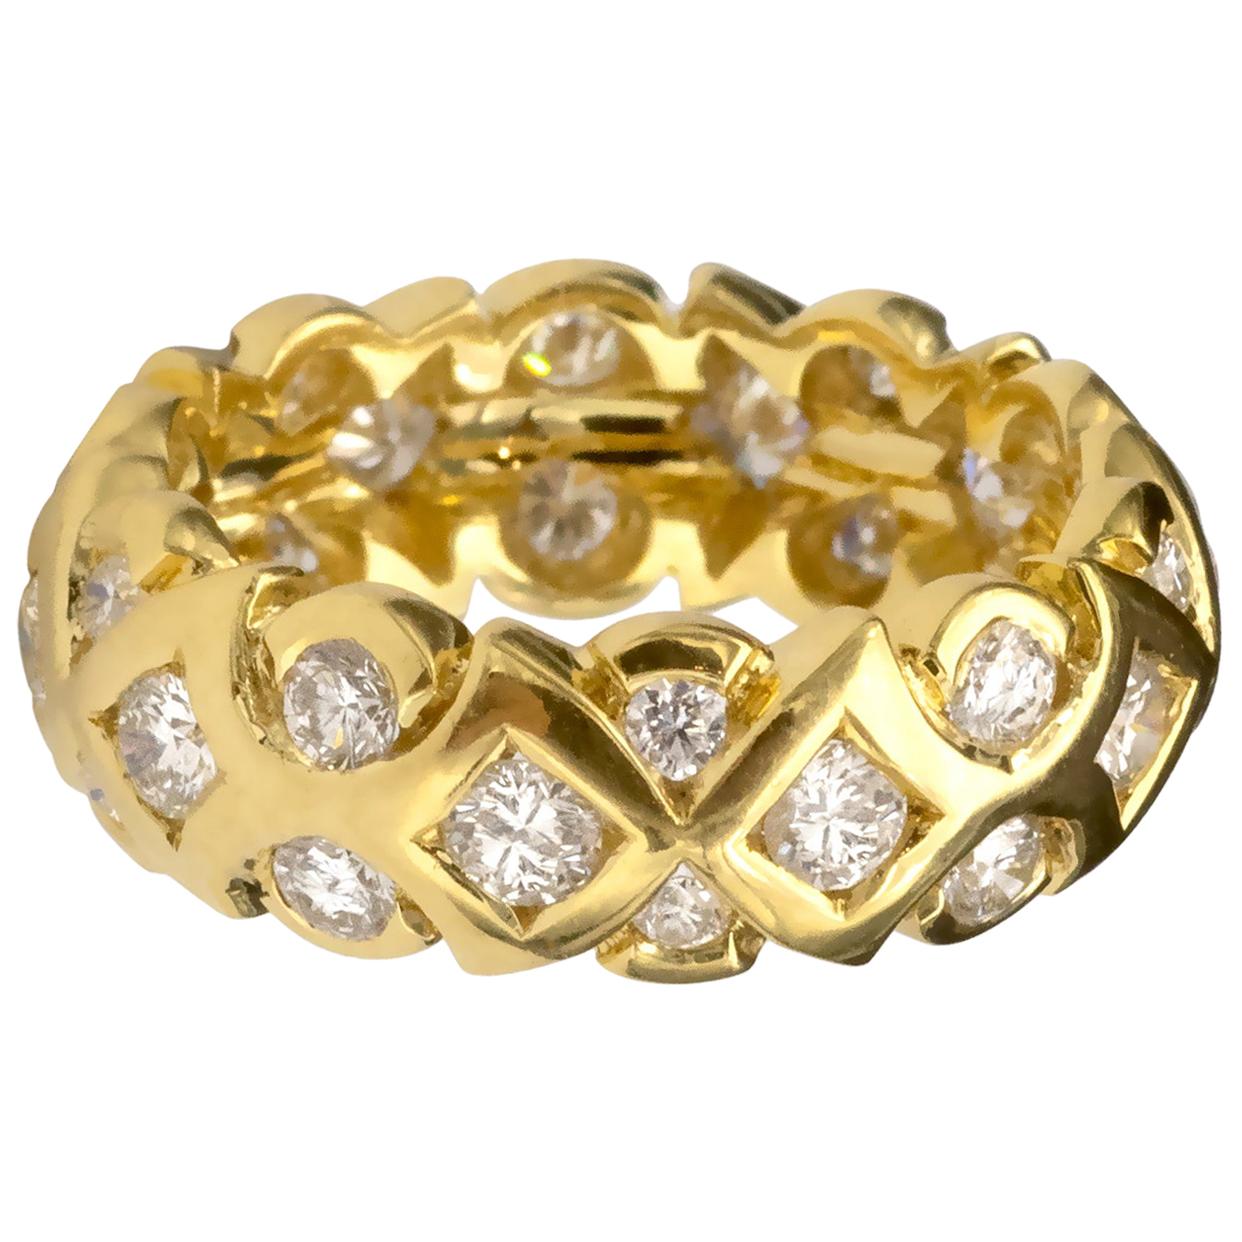 Claris.A Jewelry - 25 For Sale at 1stdibs | claris diamonds 